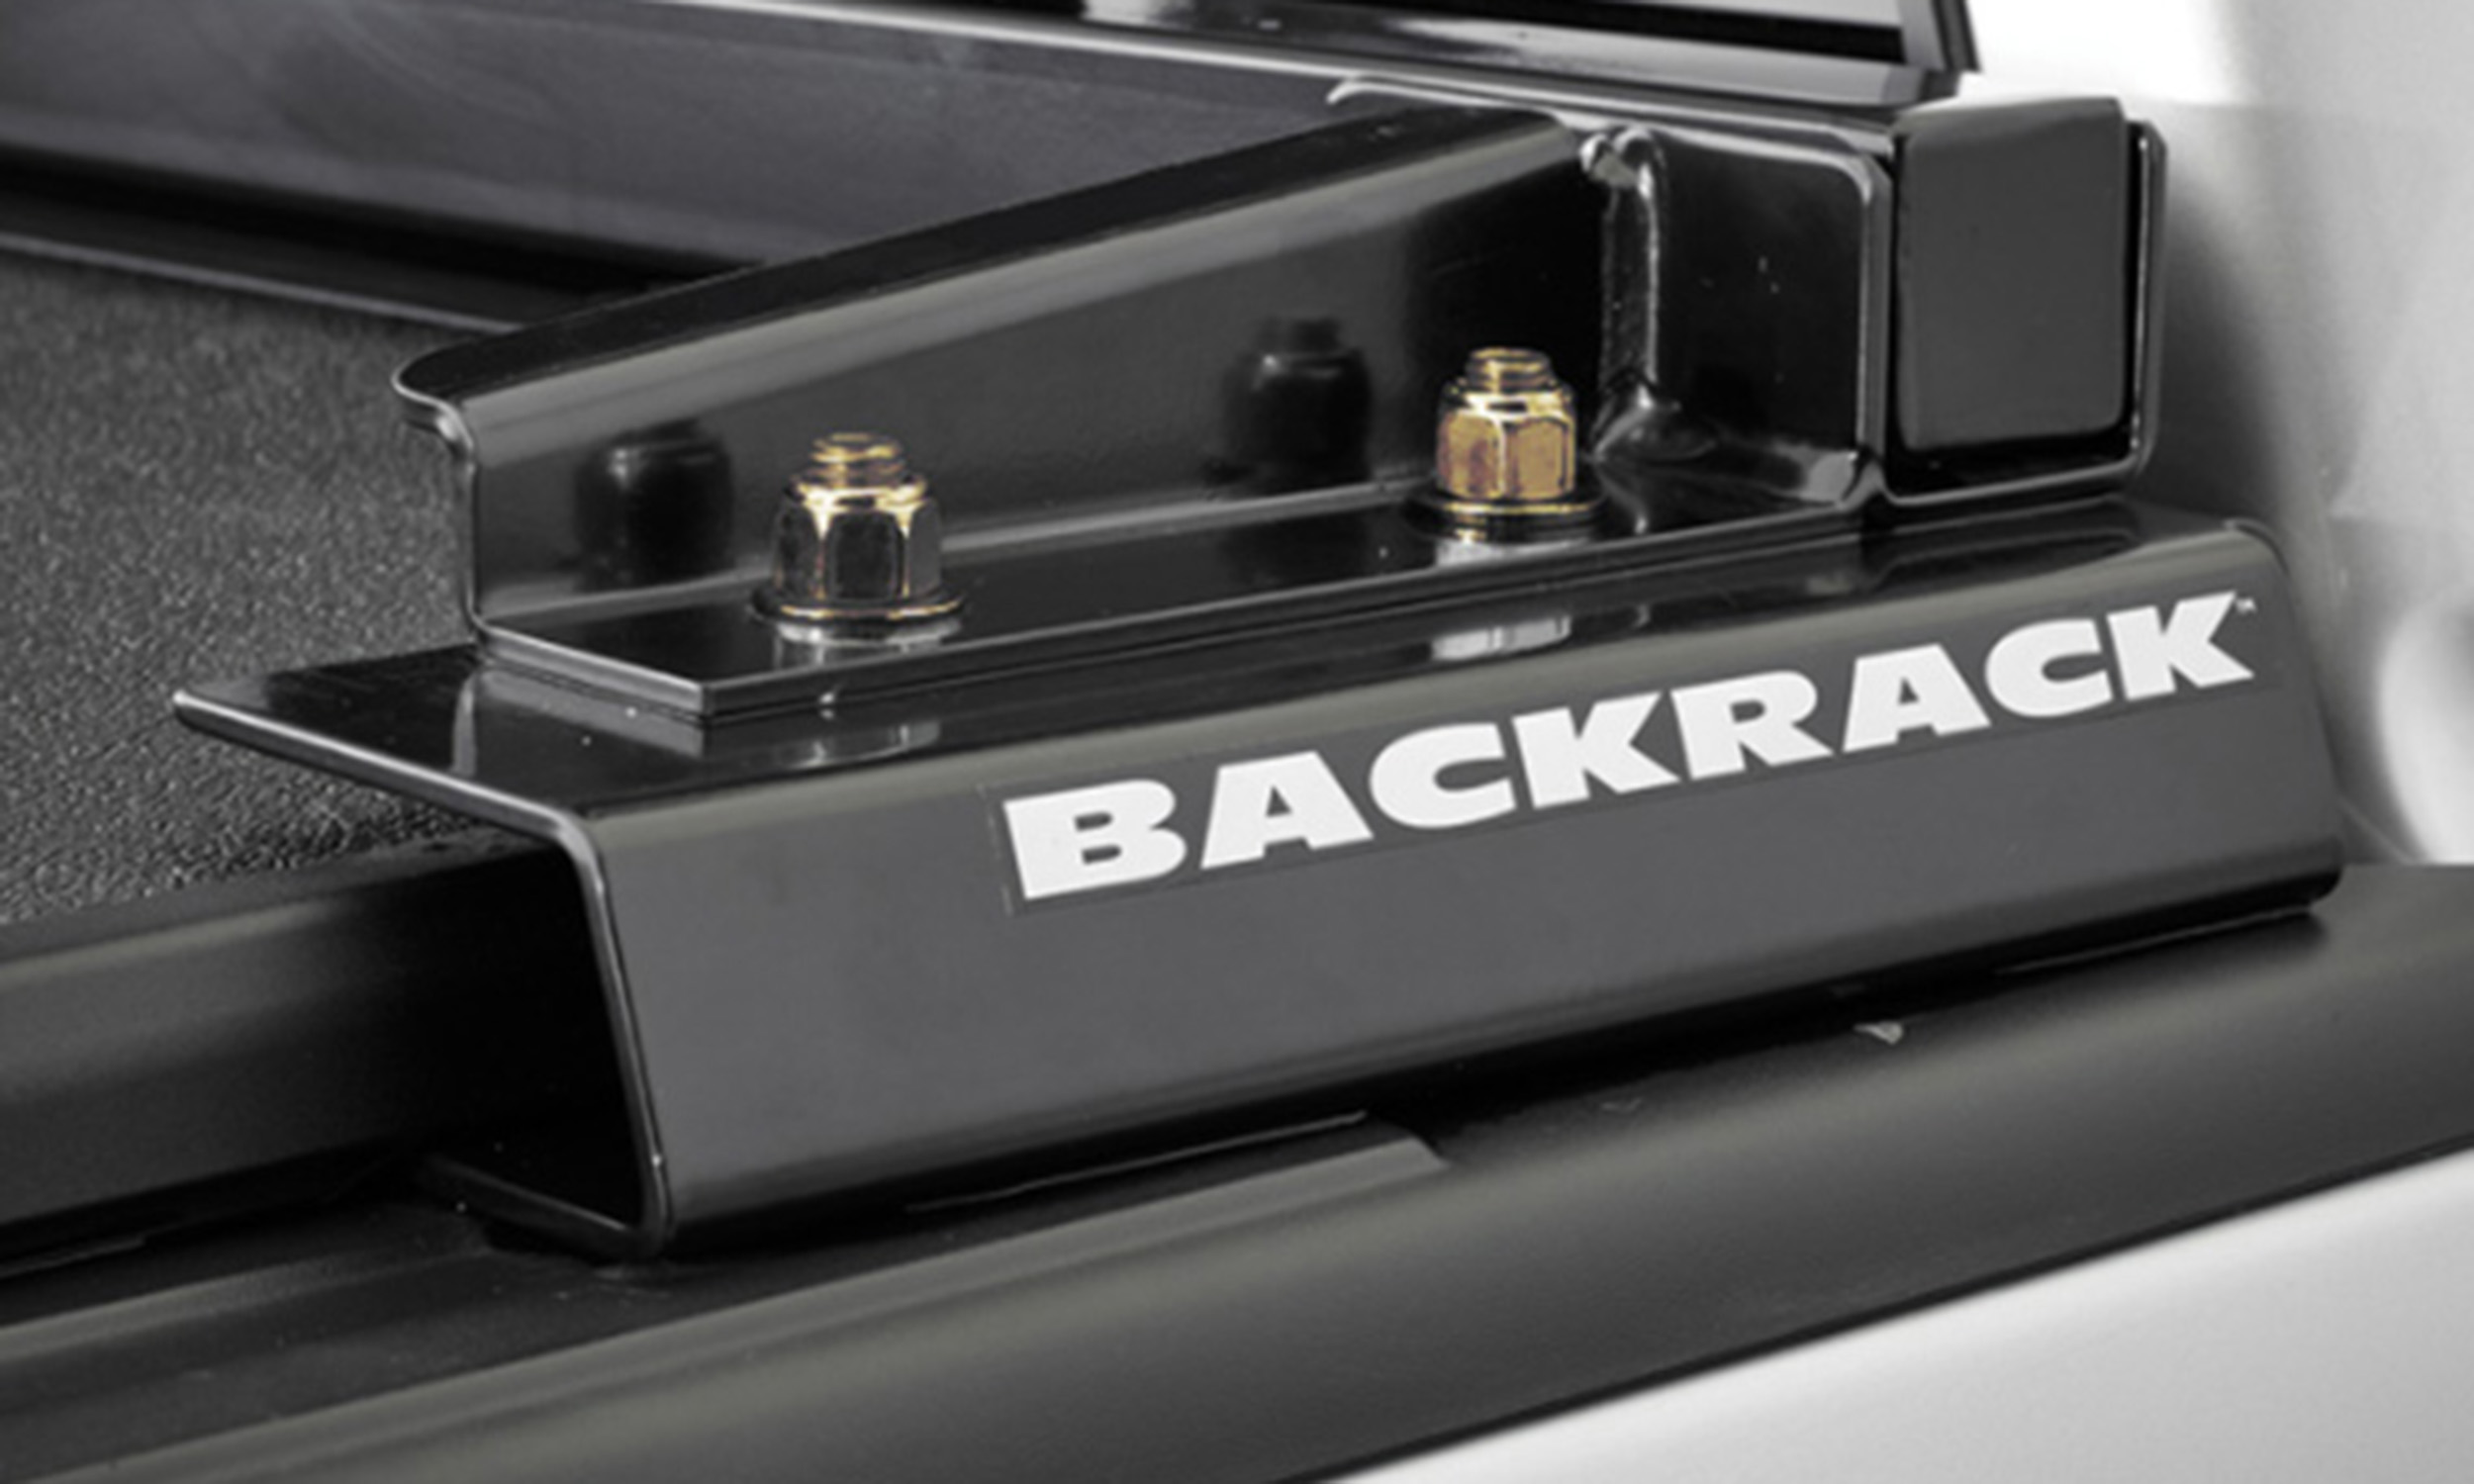 Backrack 50228 Truck Cab Protector / Headache Rack Installation Kit